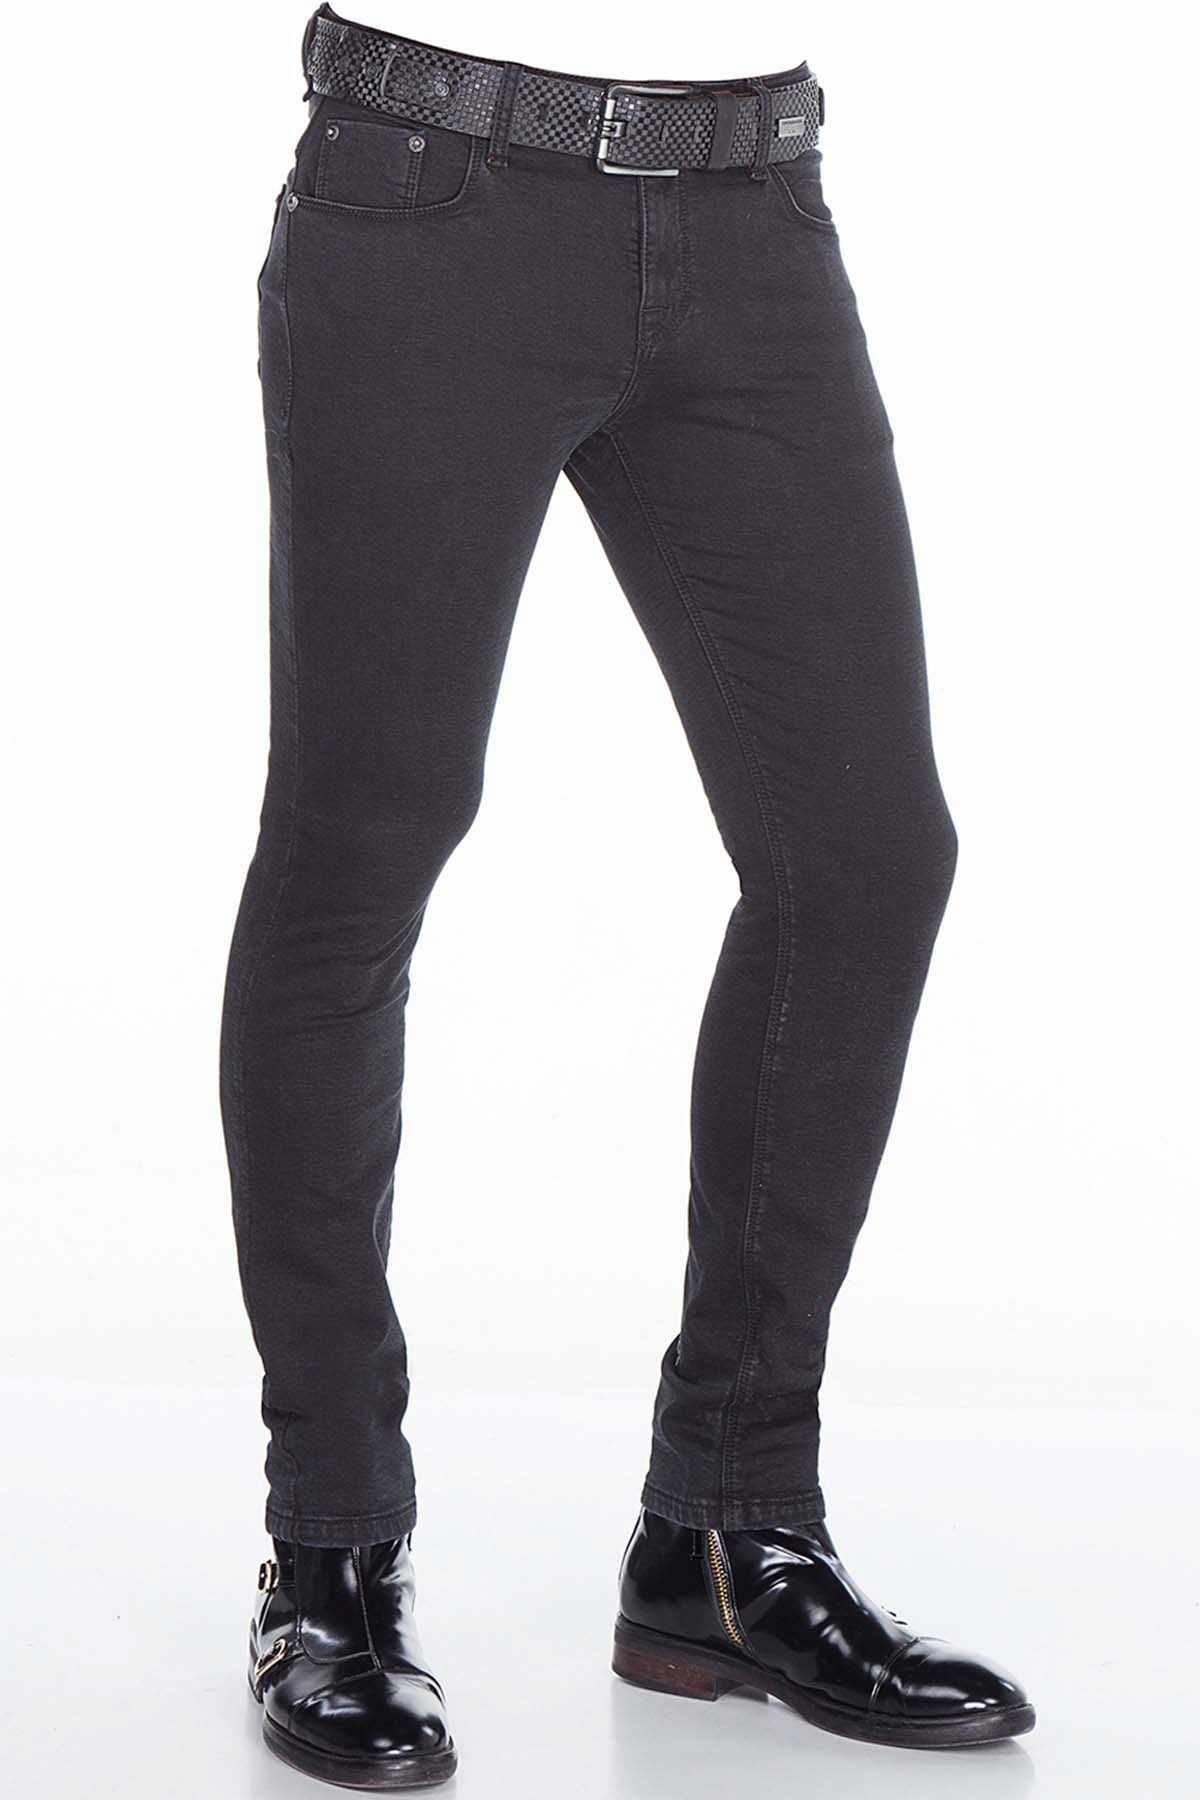 CD403 Men's Slim-Fit Jeans in the classic 5-pocket design